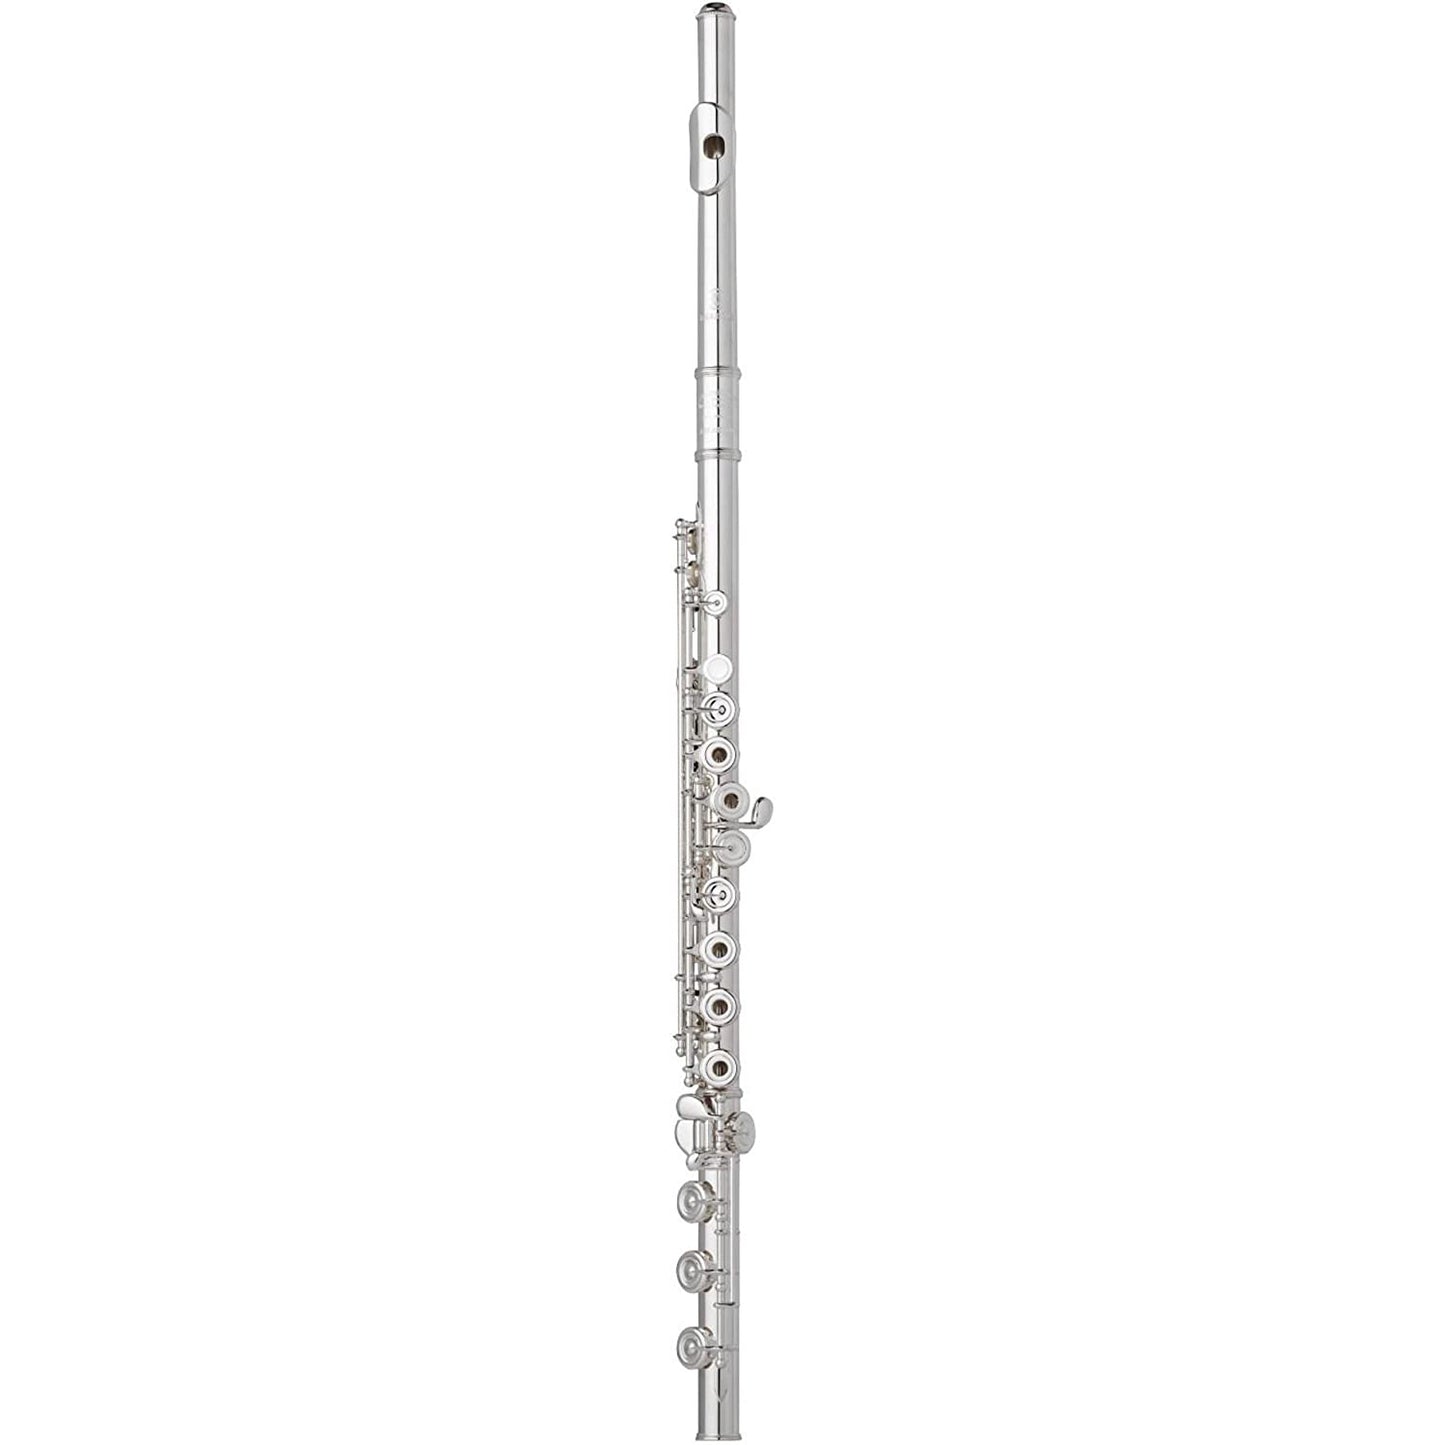 Wm. S Haynes Amadeus AF780-BO Flute Sterling Silver Headjoint